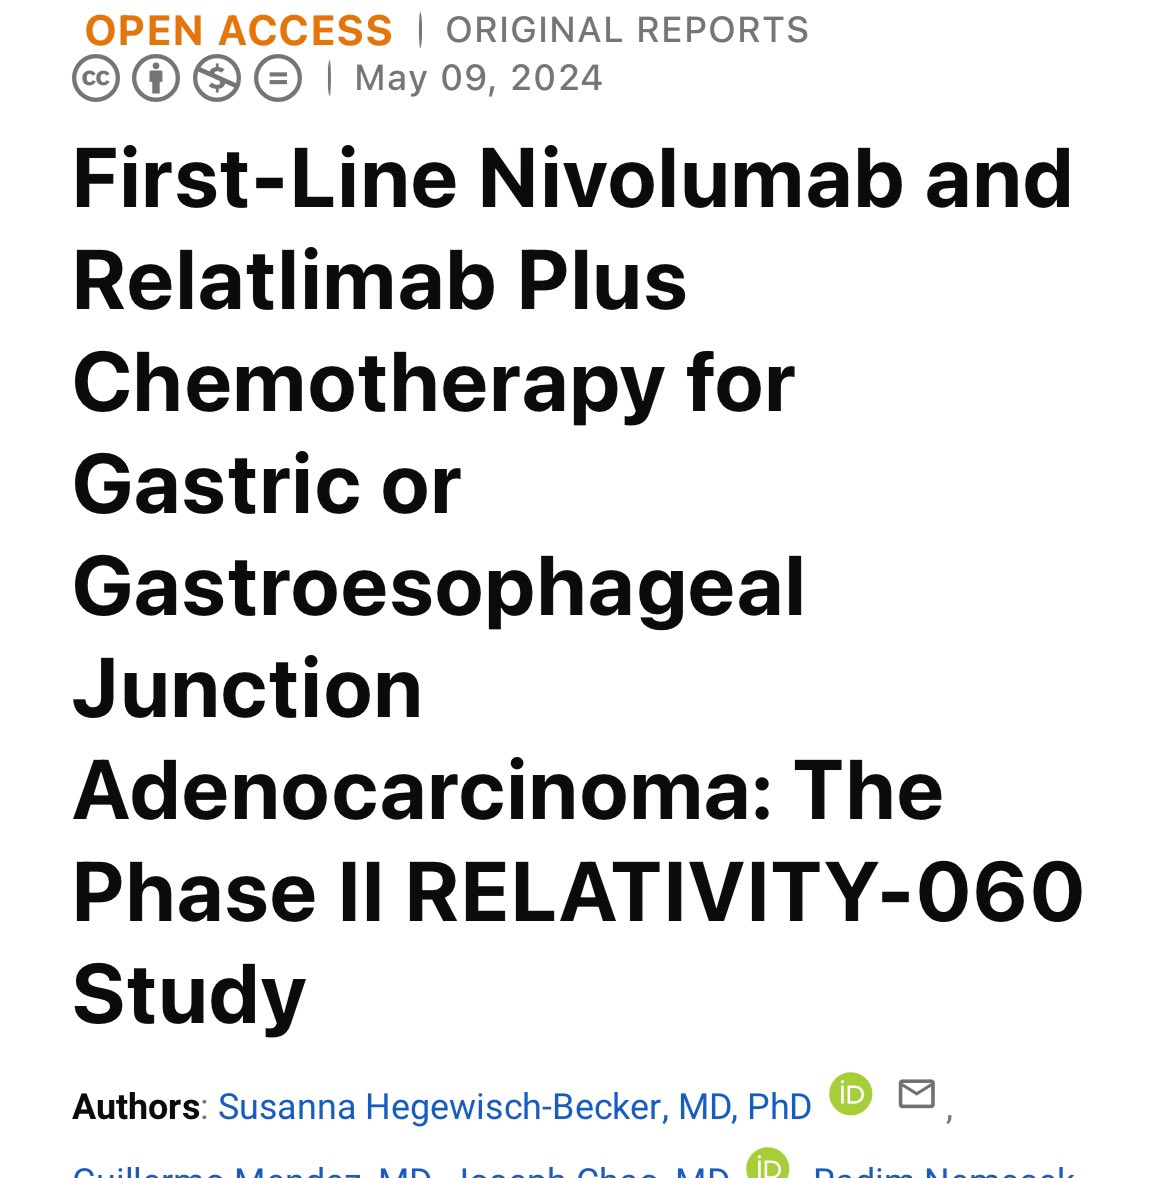 💉Adding relatlimab to nivolumab+ ChT in first line treatment of advanced gastric and GEJ cancer
RELATIVITY-060 @JCO_ASCO 

❌Negative study
➡️ORR: 48% vs 61%
➡️mPFS: 7.0 vs 8.3 mo, HR: 1.41 (0.97 to 2.05)
➡️mOS: 13.5 vs 16.0 mo, HR, 1.04: (0.70 to 1.54)